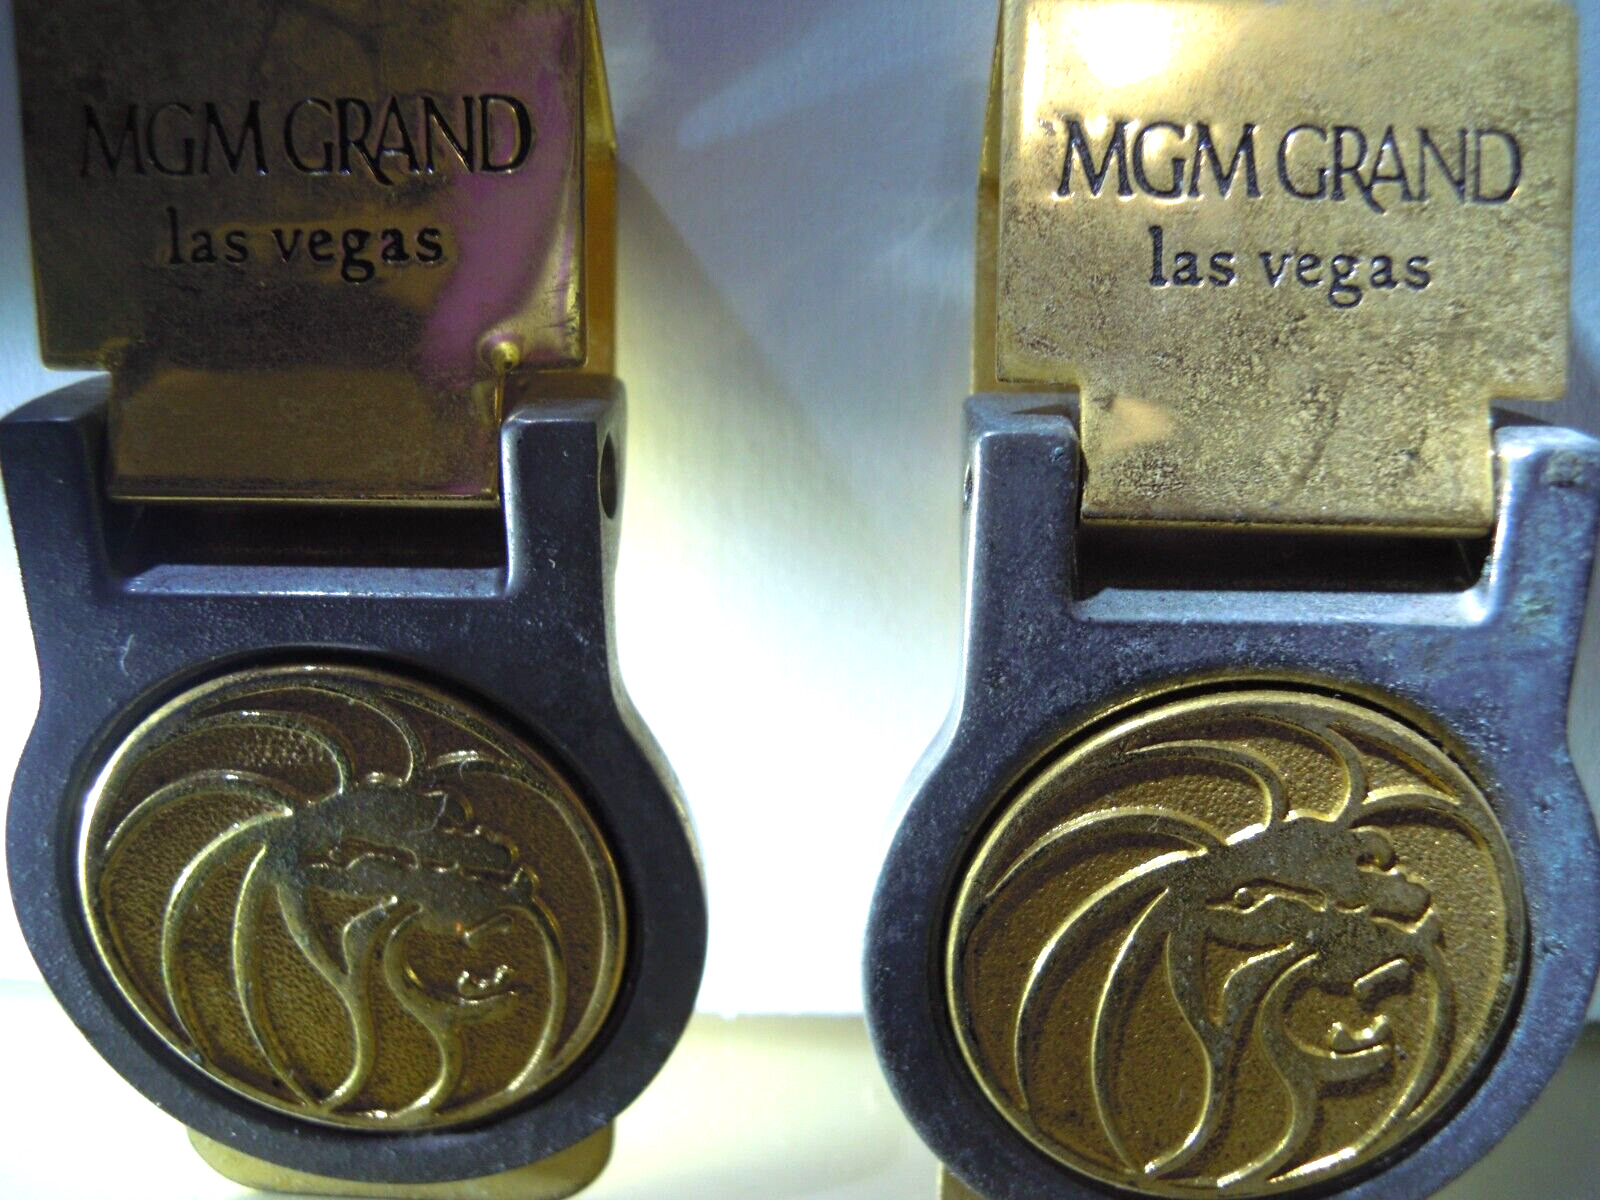 Vintage MGM Grand Las Vegas Money-clips X2 (Pre-owned)  (PLZ READ BELOW)